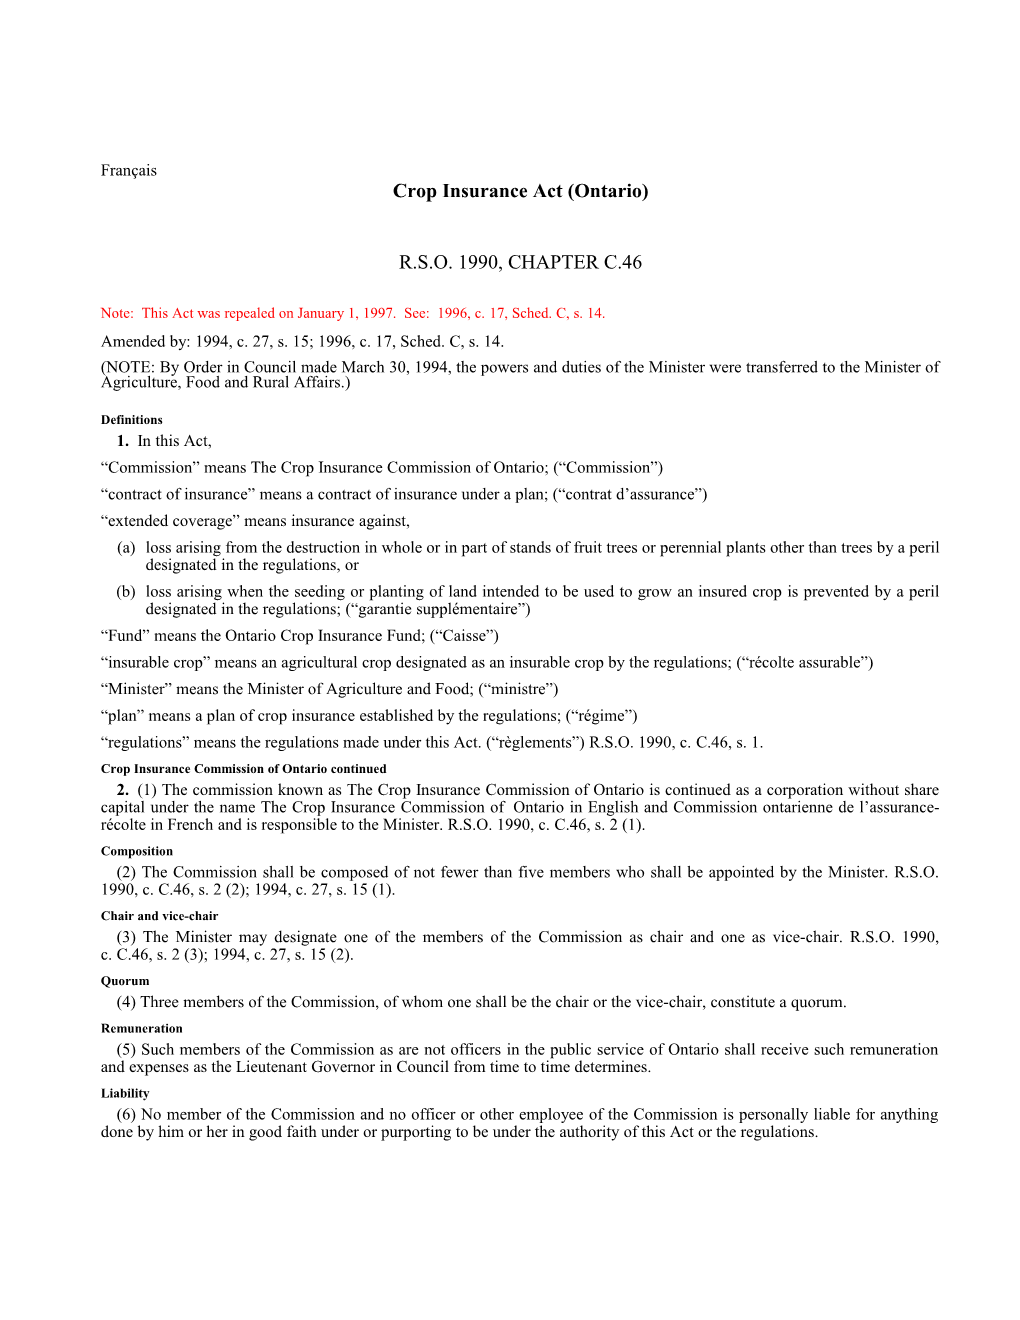 Crop Insurance Act (Ontario), R.S.O. 1990, C. C.46